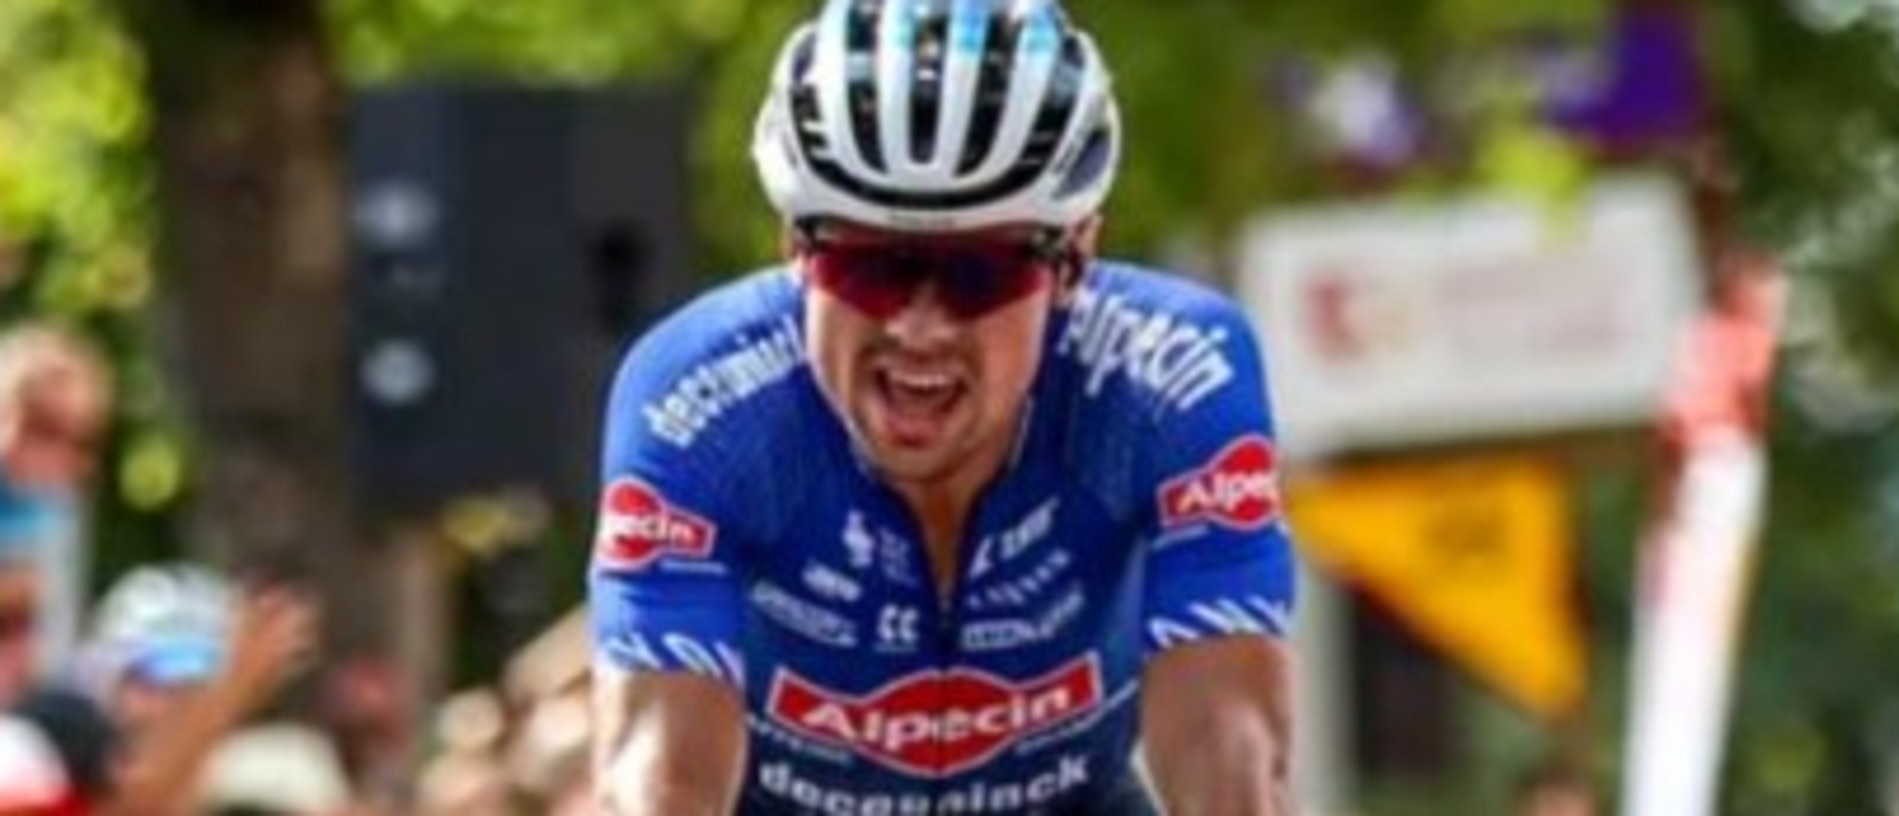 Australian cyclist Rob Stannard has been banned